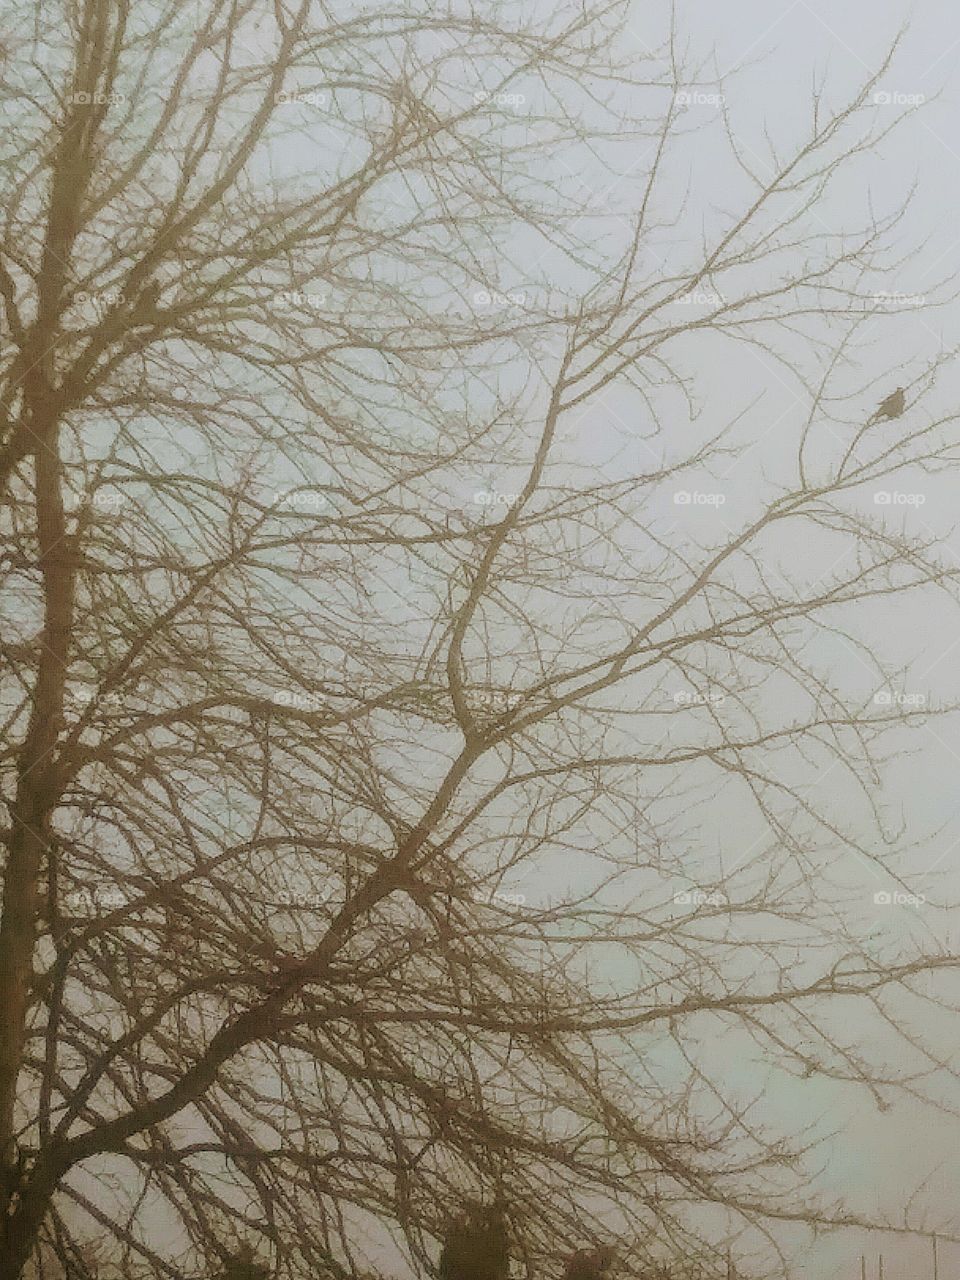 foggy tree with crow